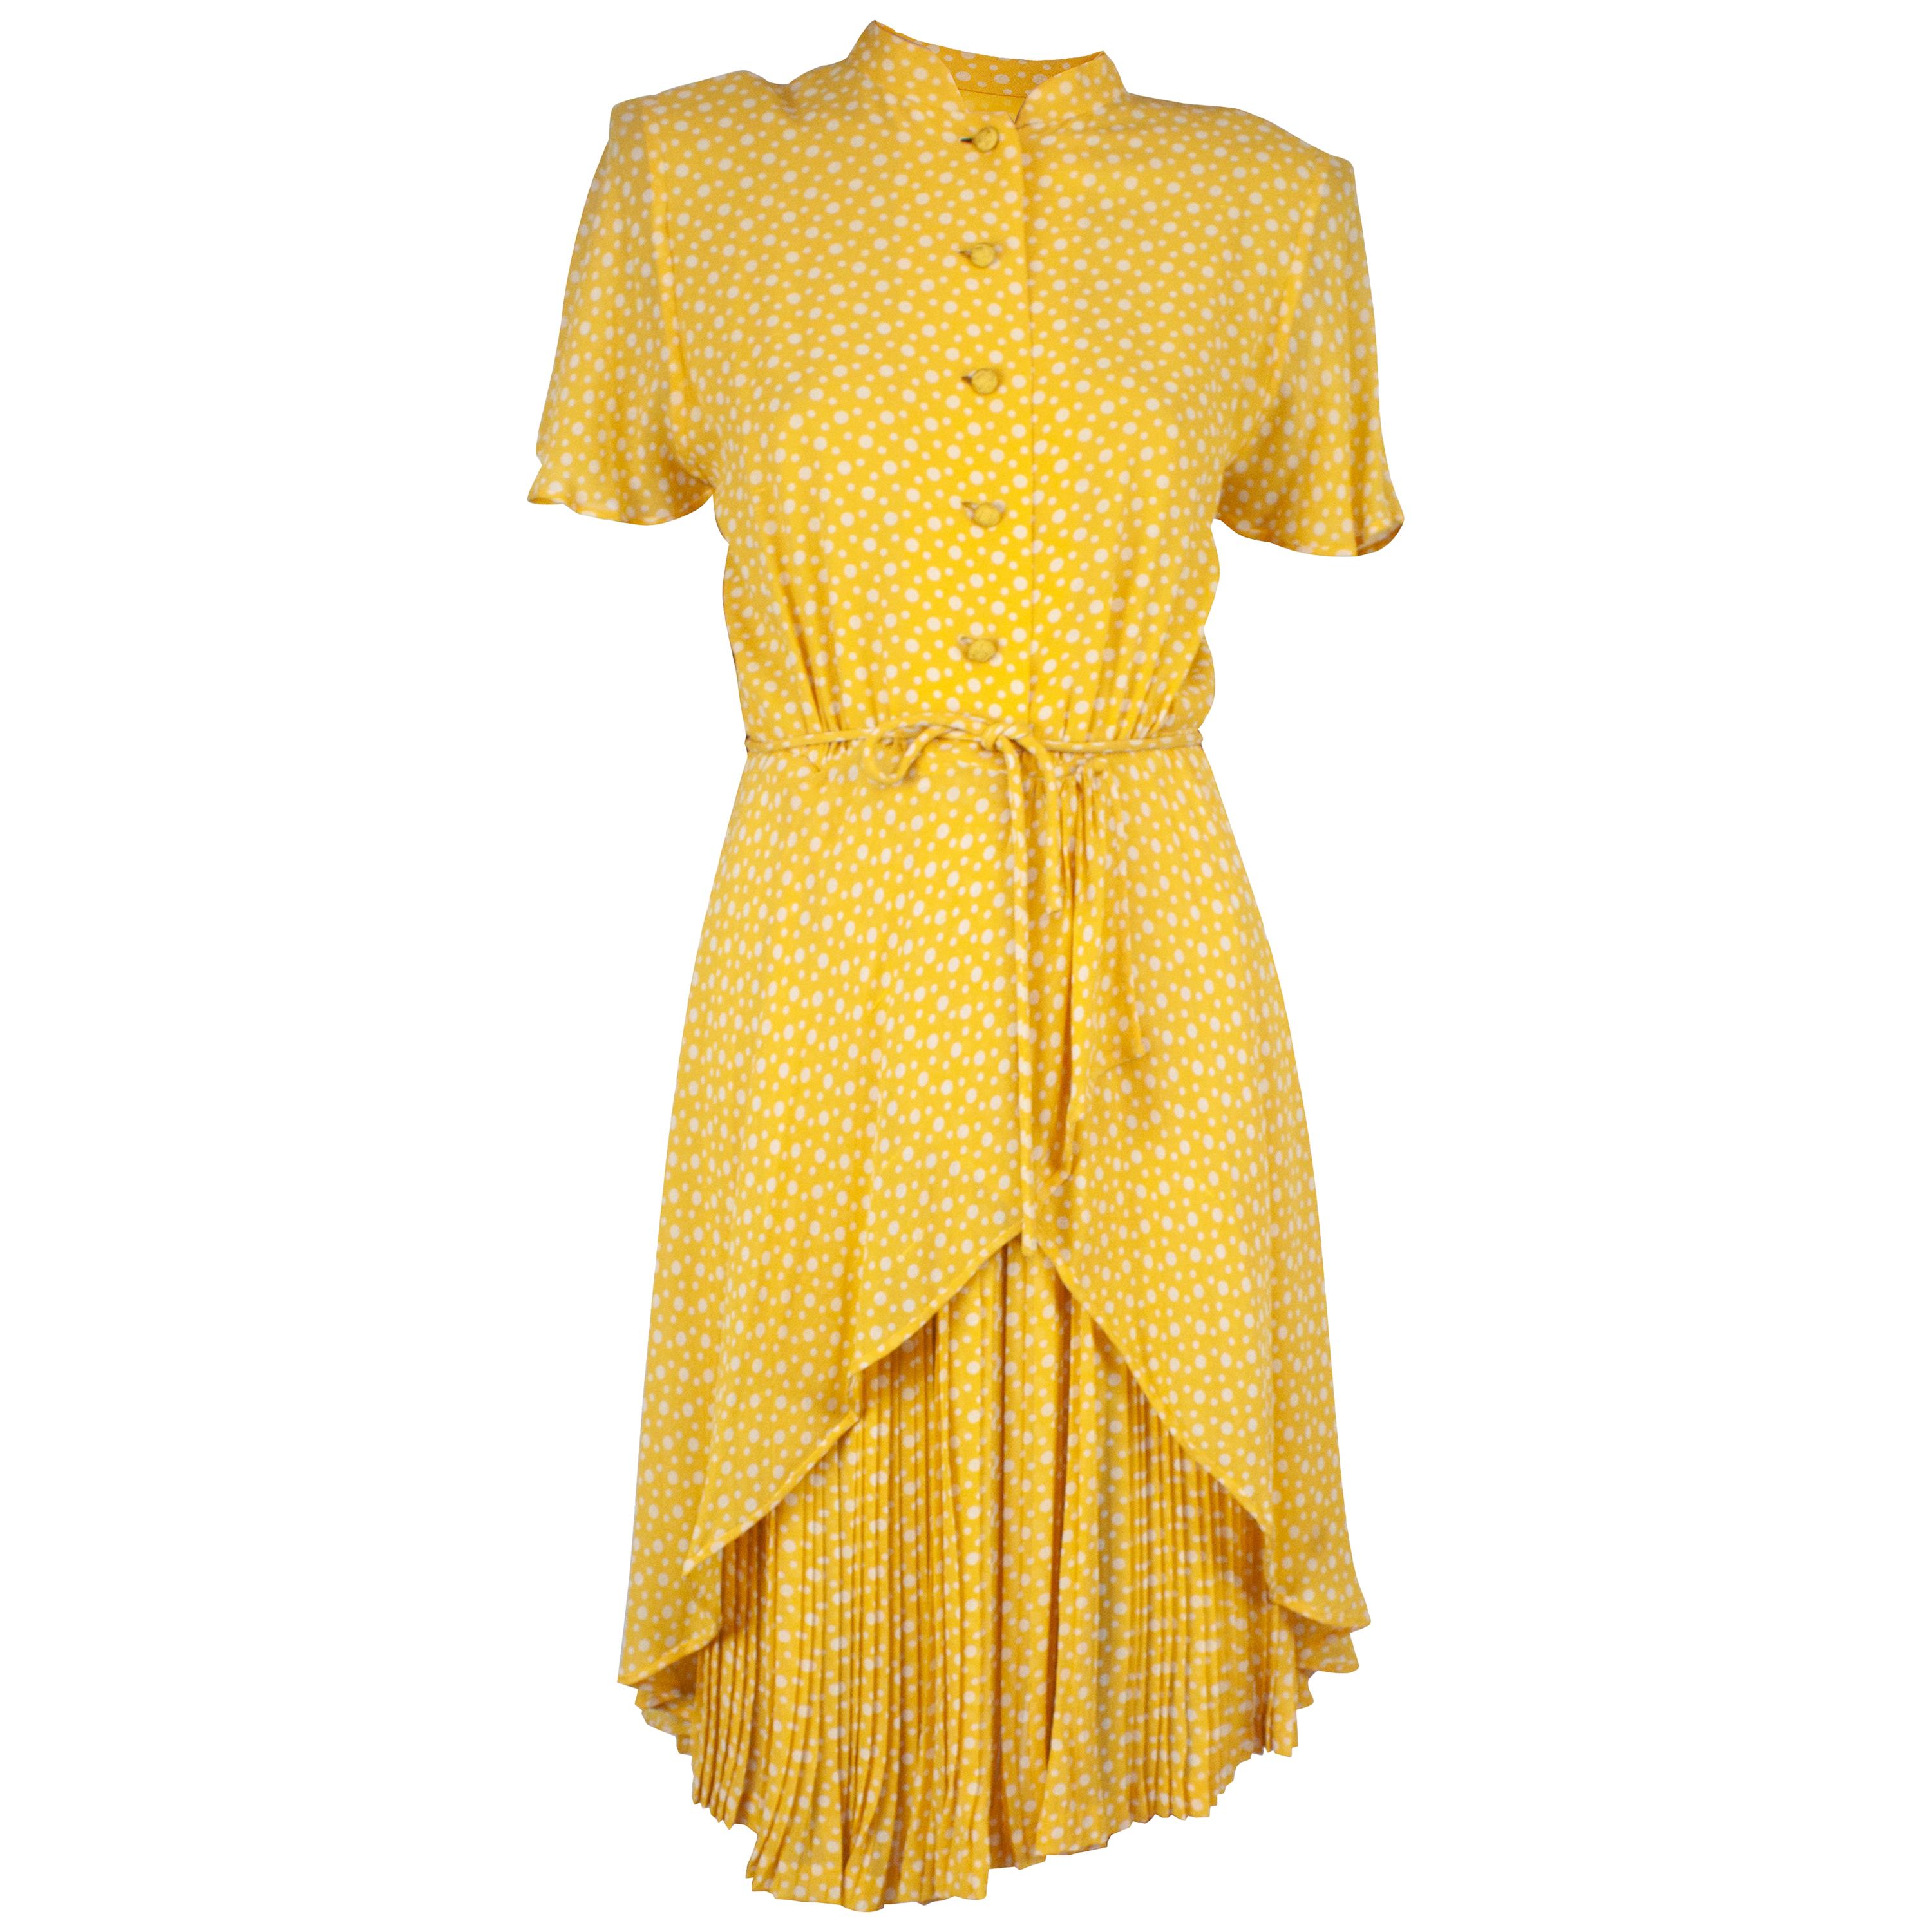 Valentino couture yellow silk chiffon dress. circa 1970s